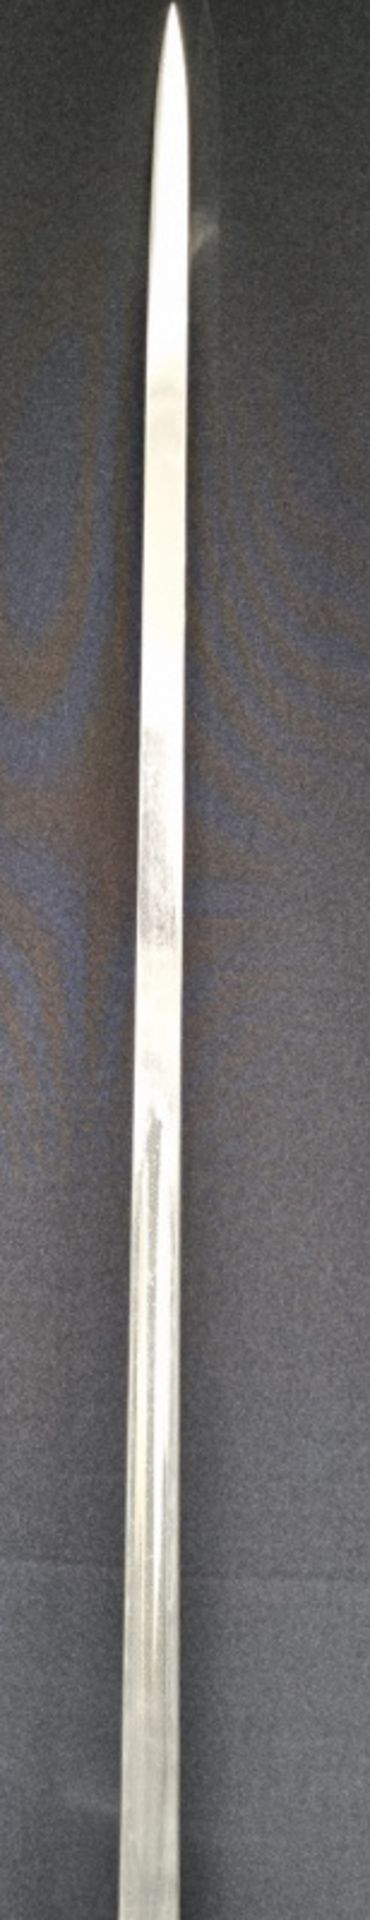 R E Ceremonial Sword - serial number W N005 E - Image 7 of 9